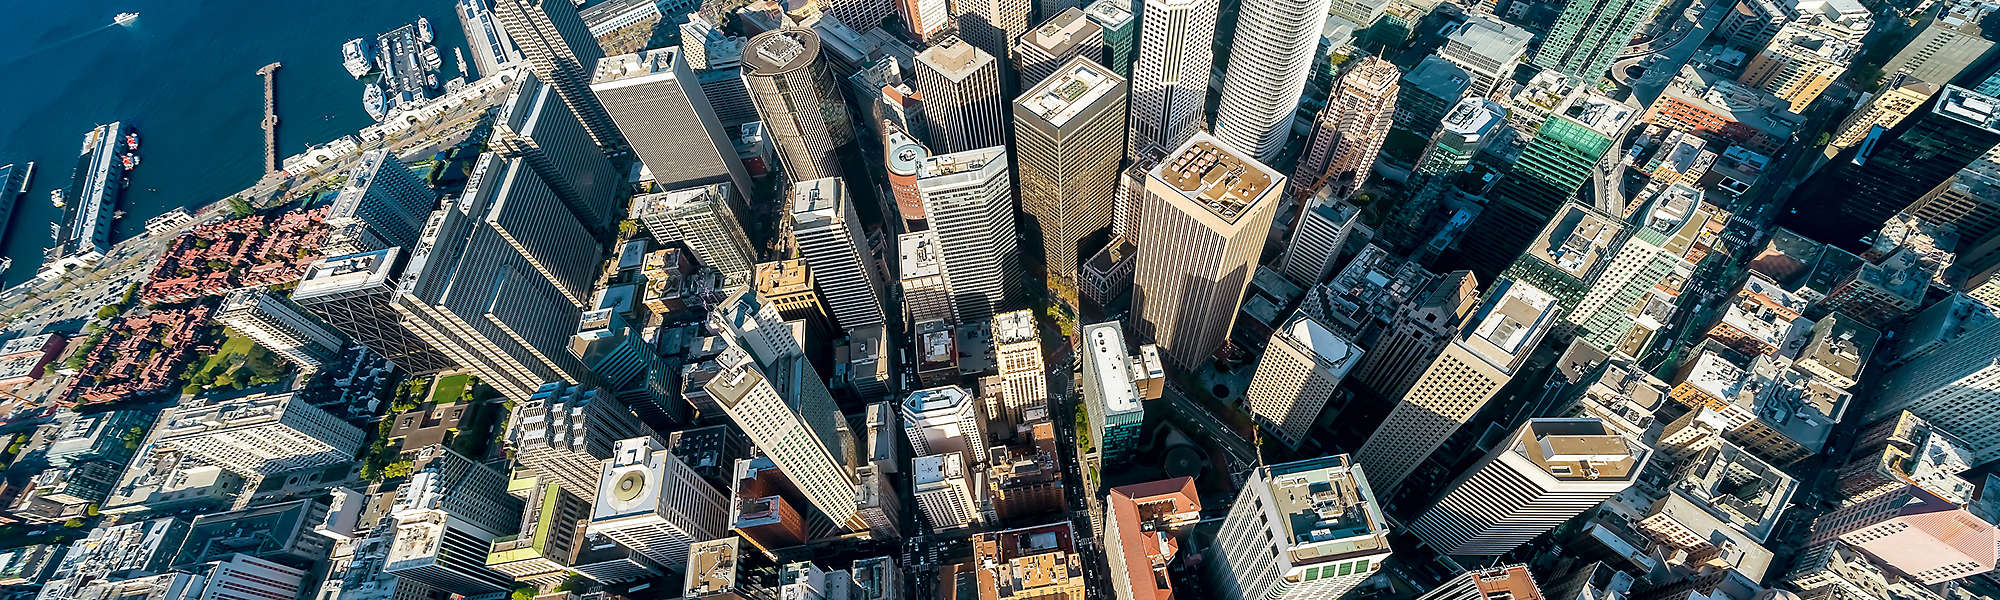 Downtown San Francisco aerial